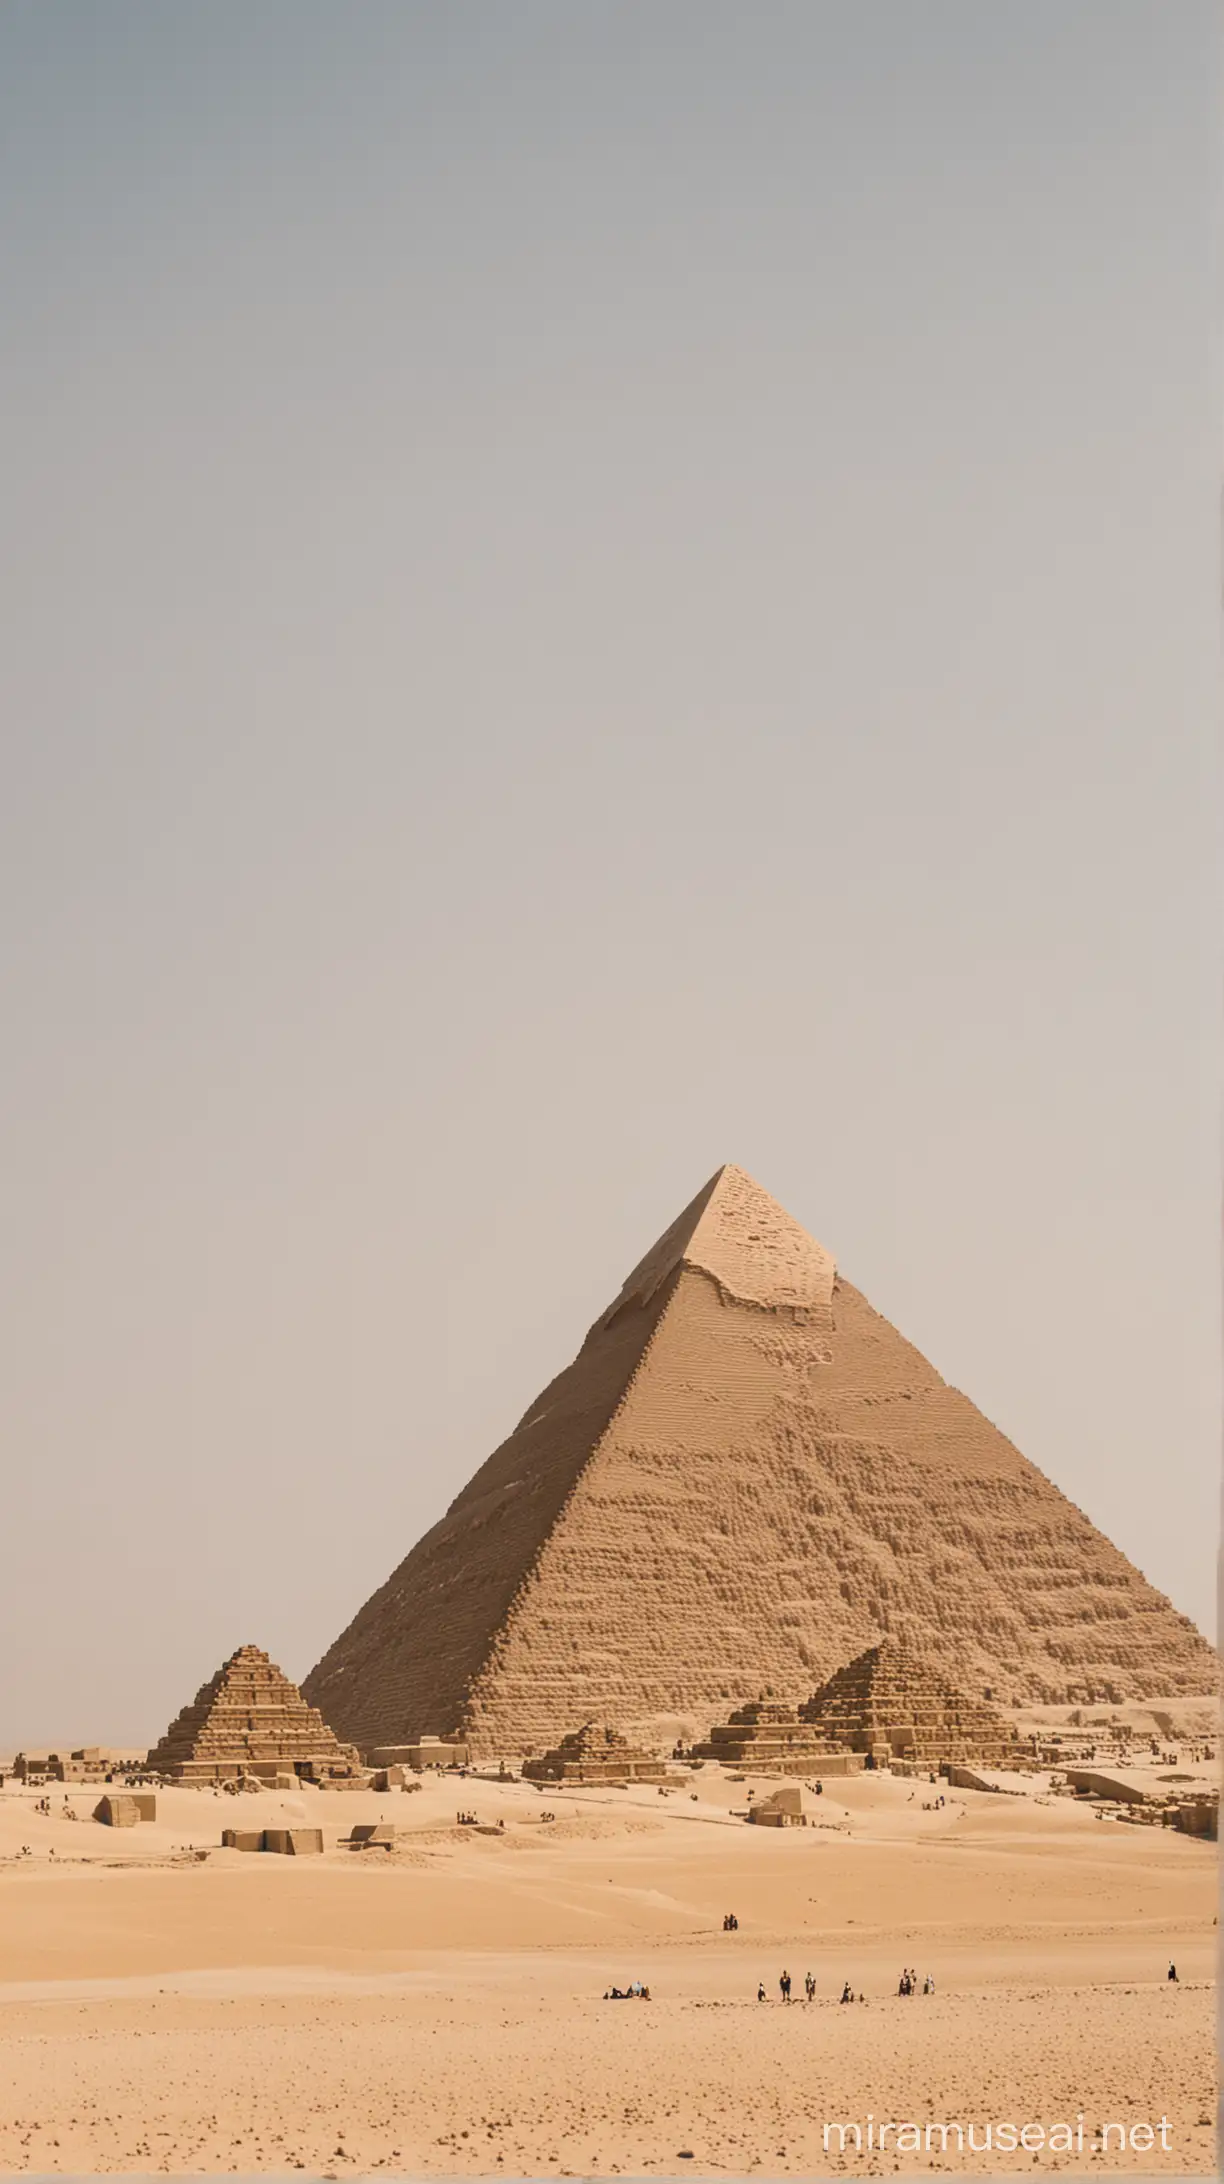 Raja firaun di Mesir, Wide shot ada pyramid